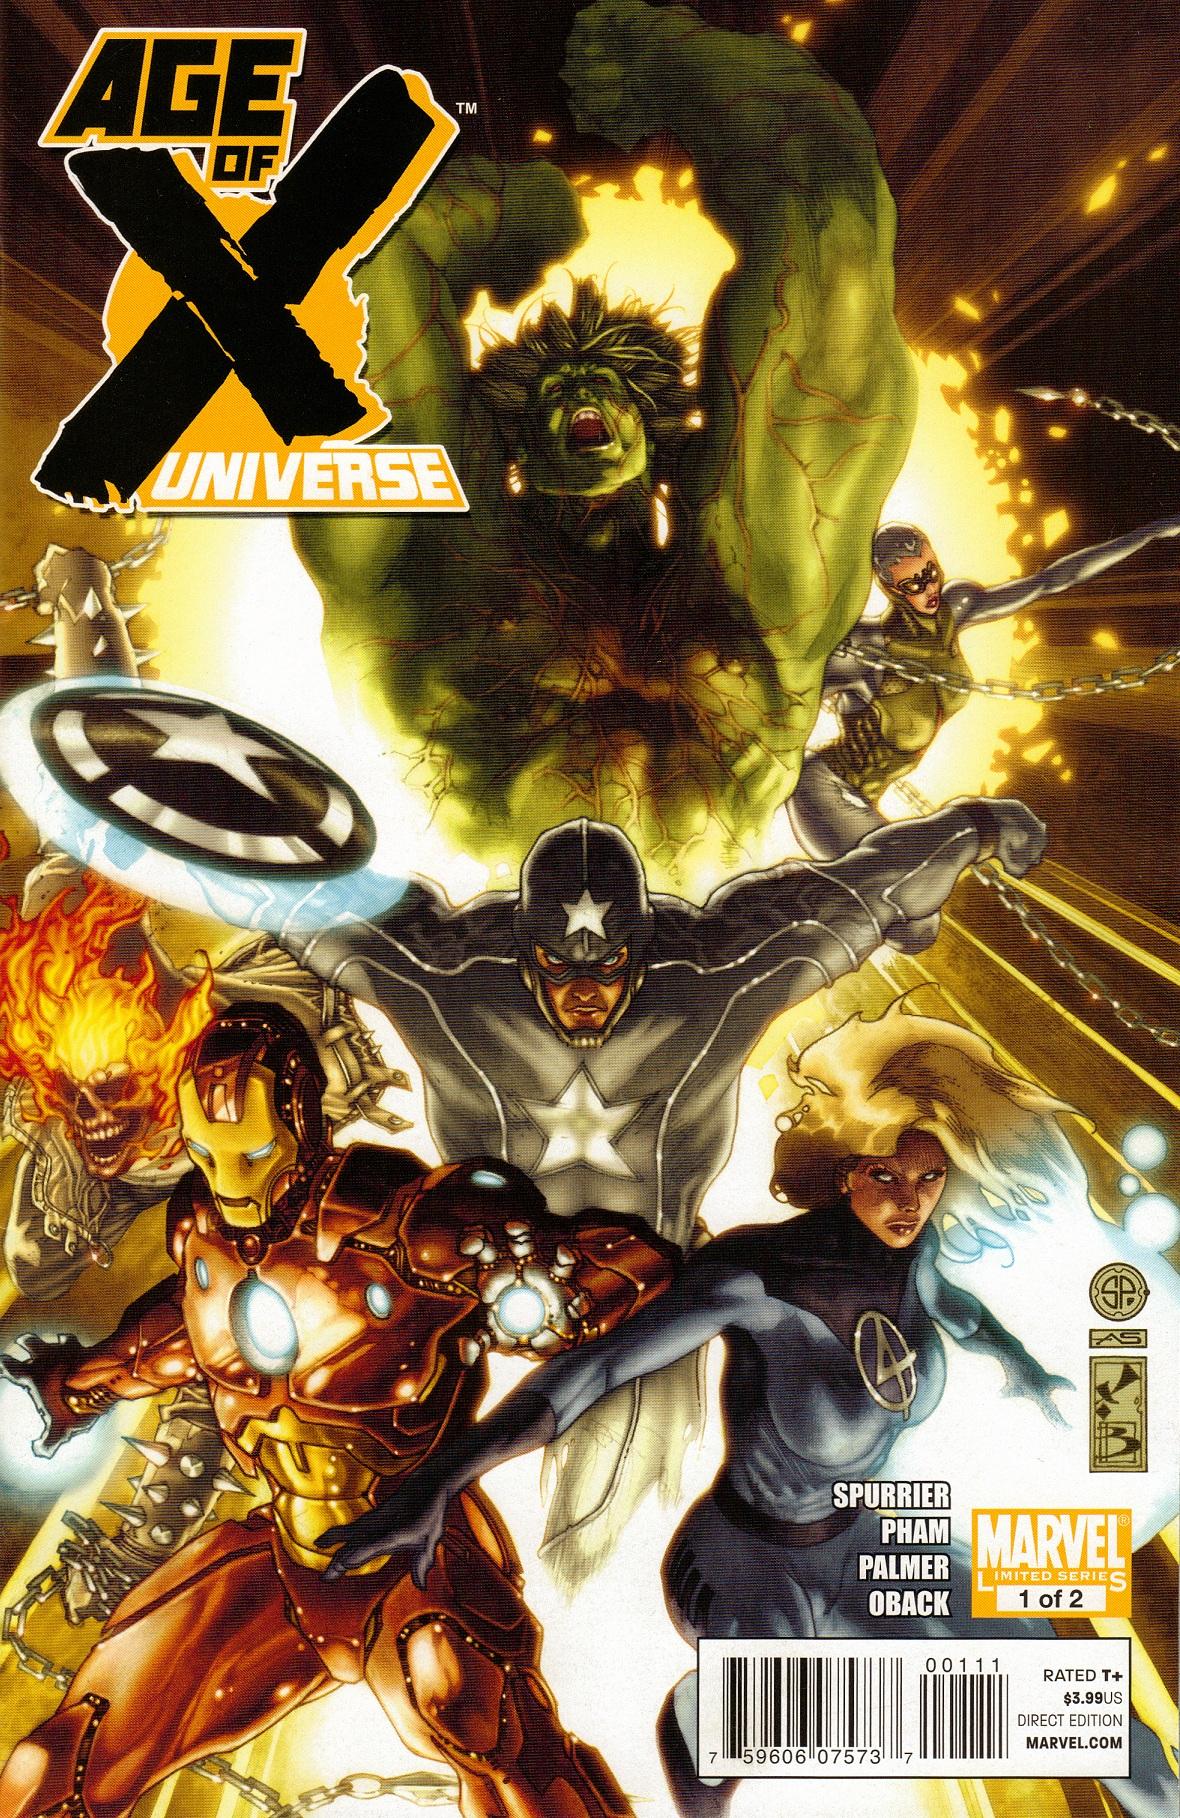 Age of X Universe Vol. 1 #1